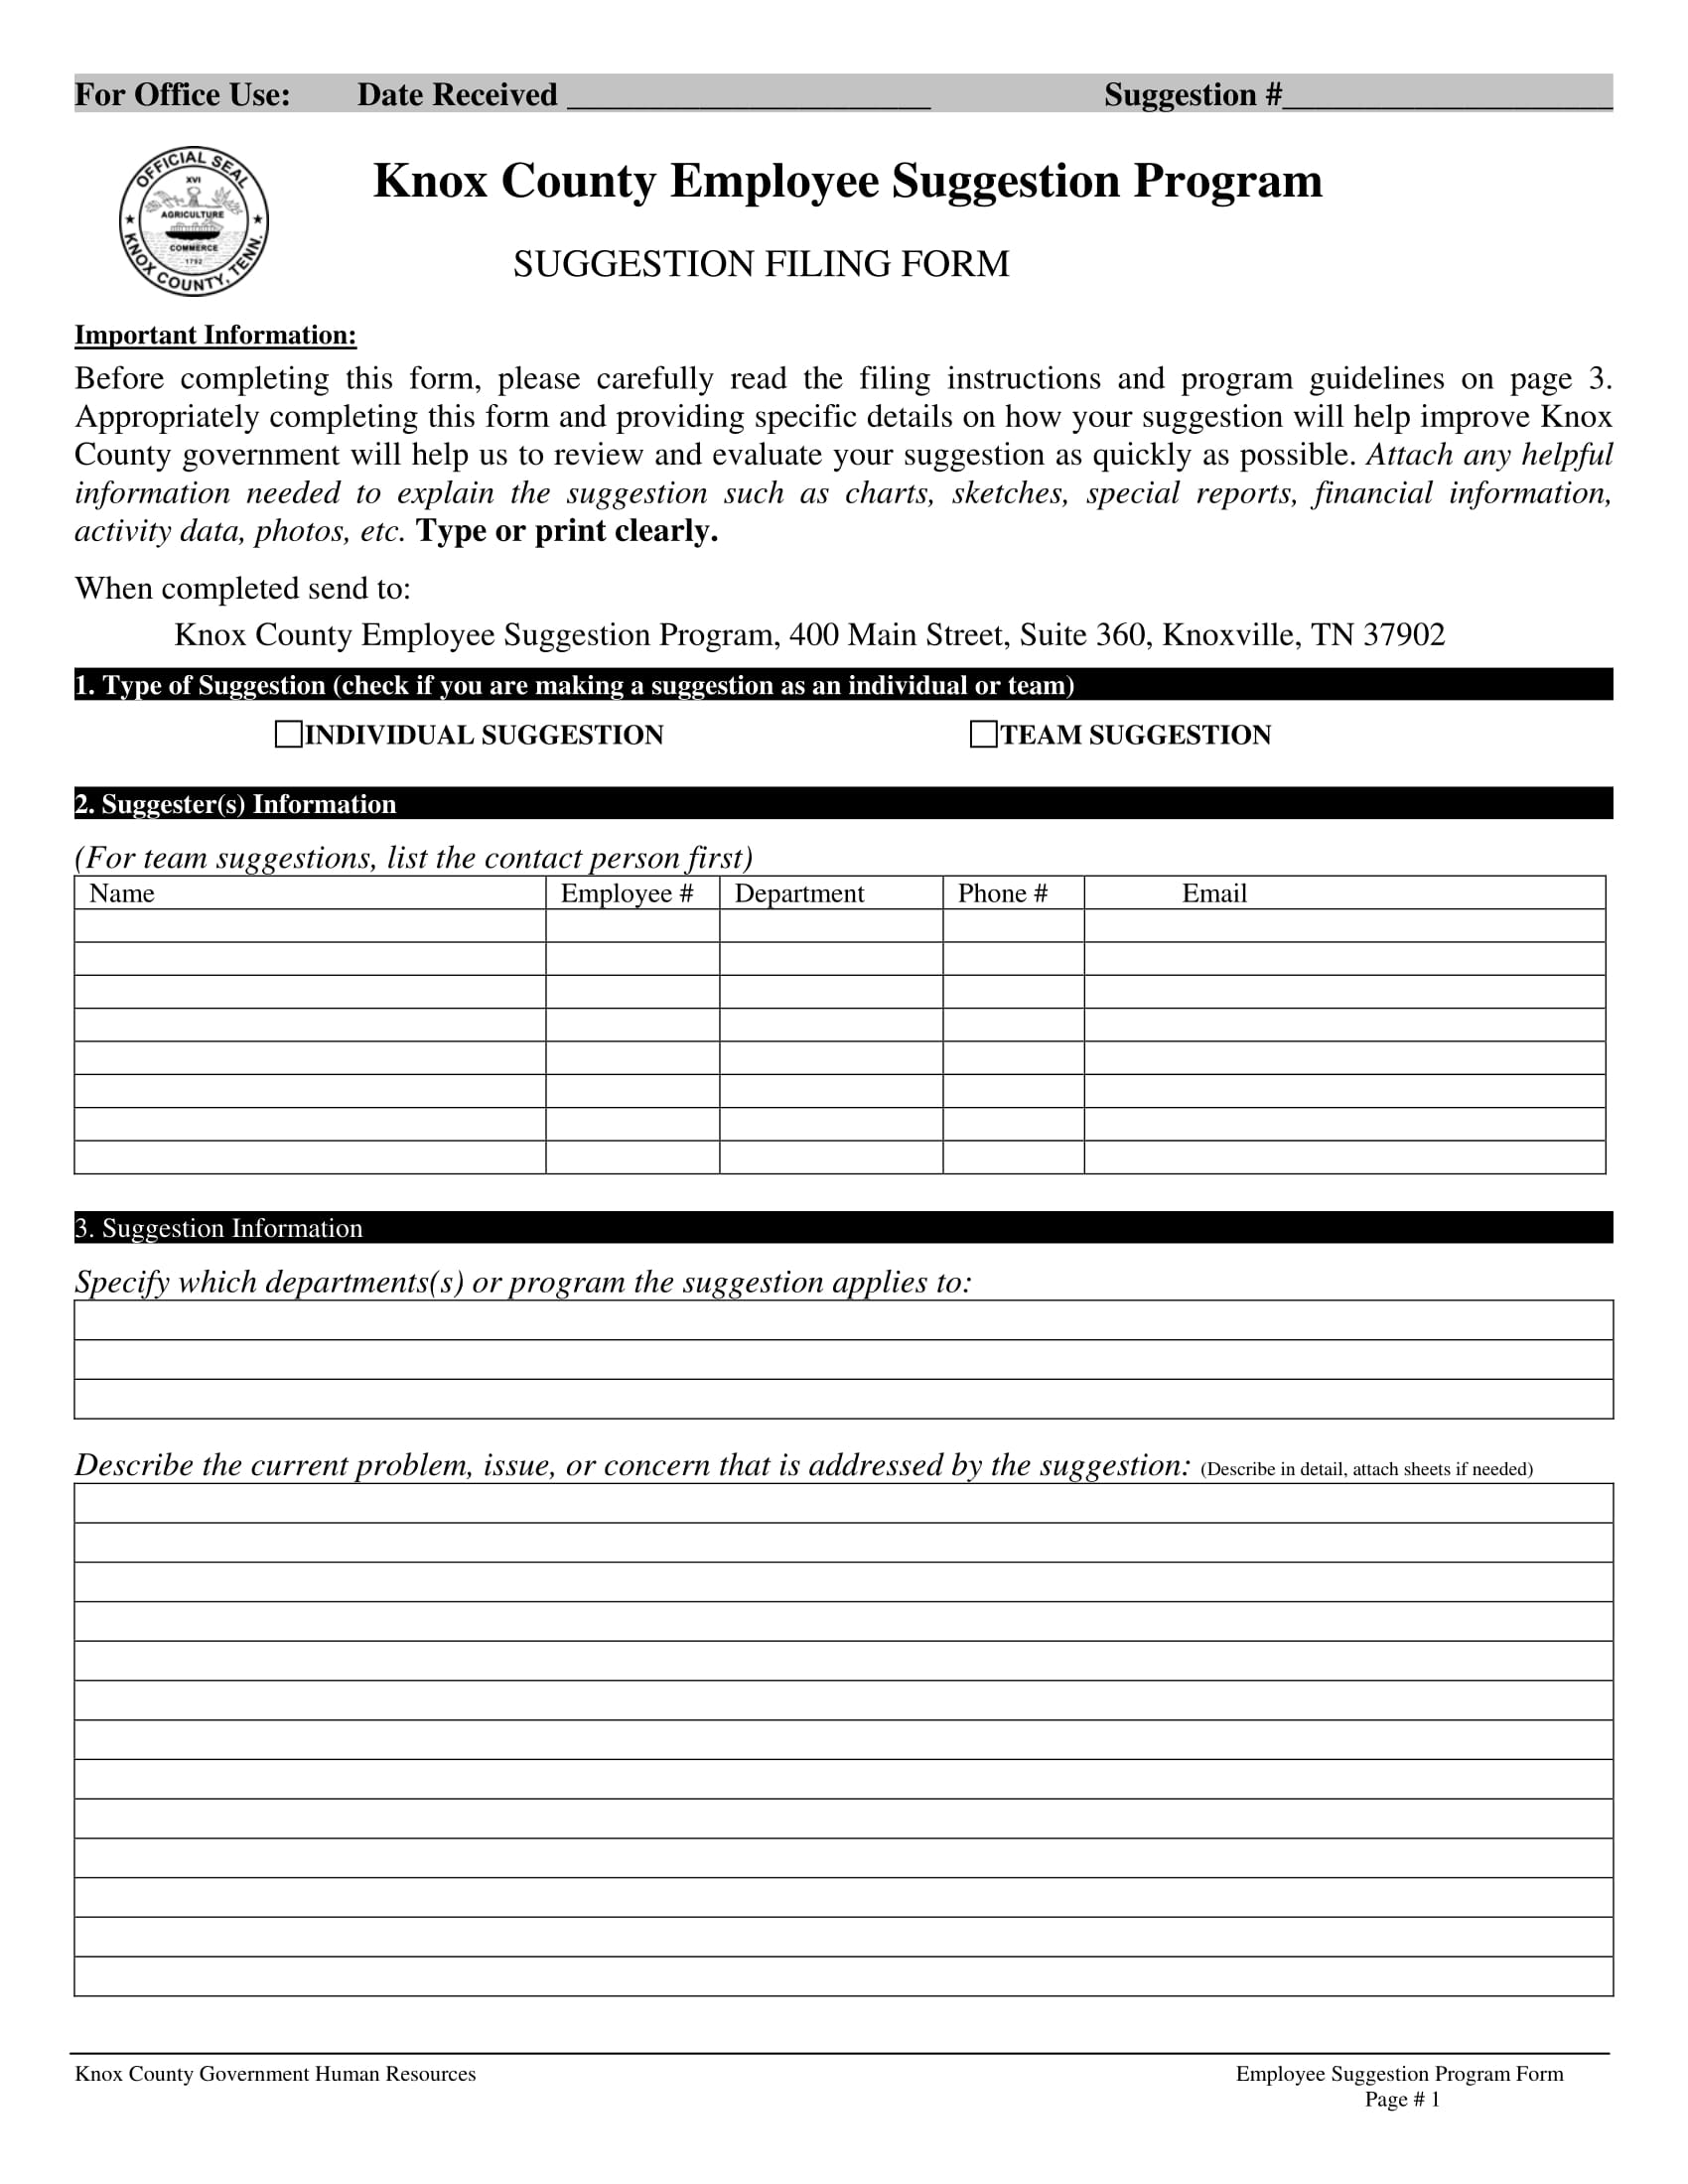 county employee suggestion program form 1